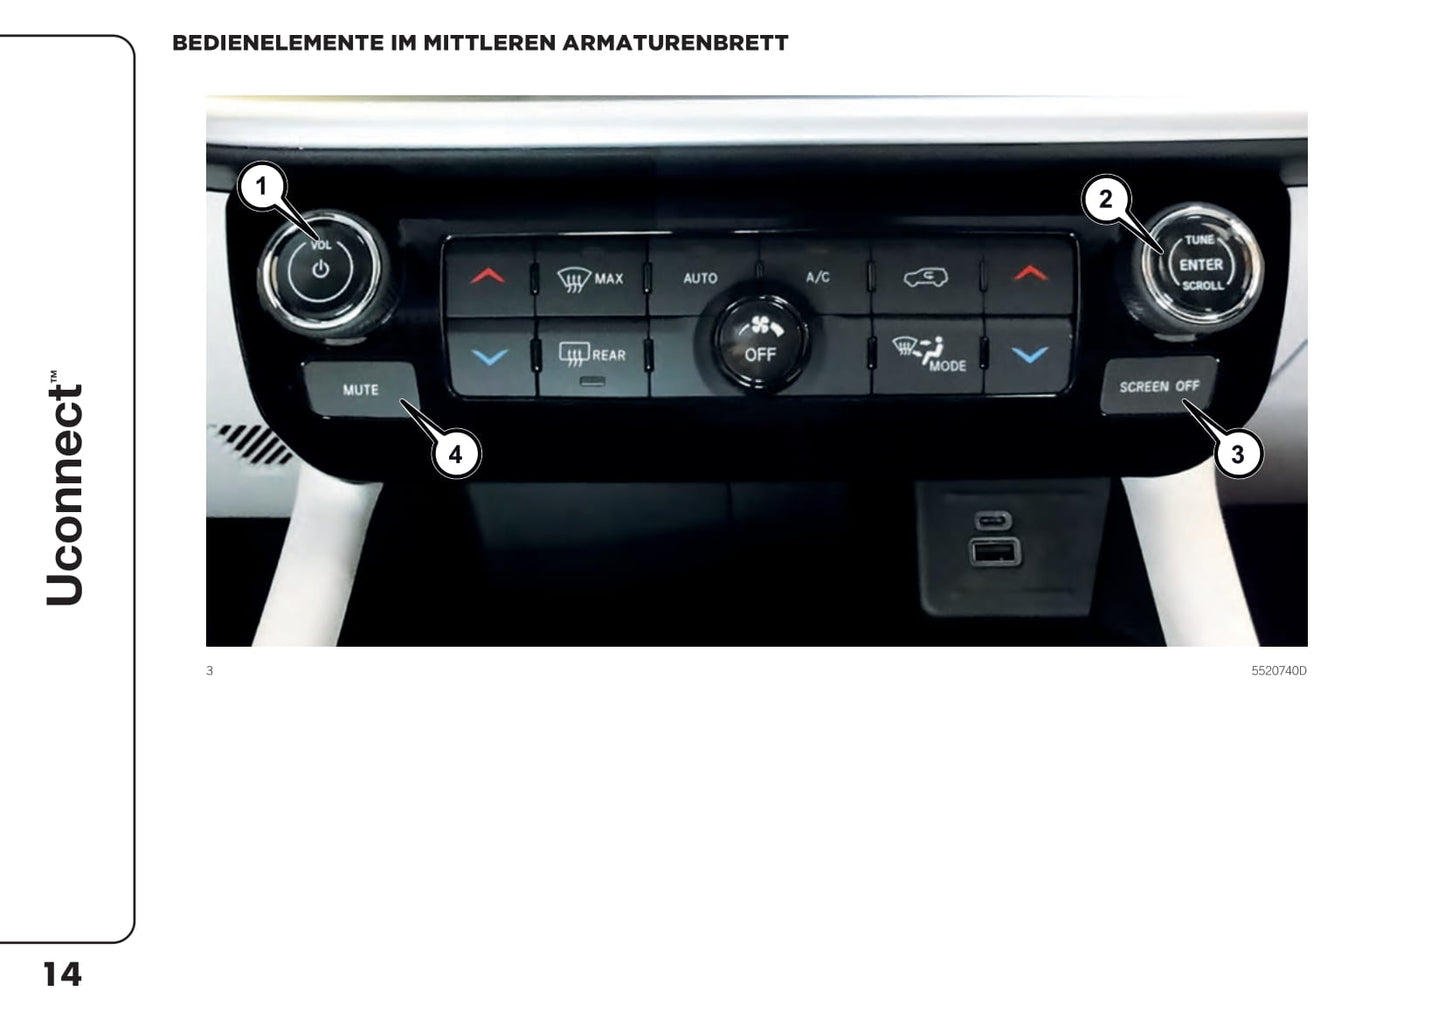 Jeep Compass Uconnect Nav Bedienungsanleitung 2020 - 2023